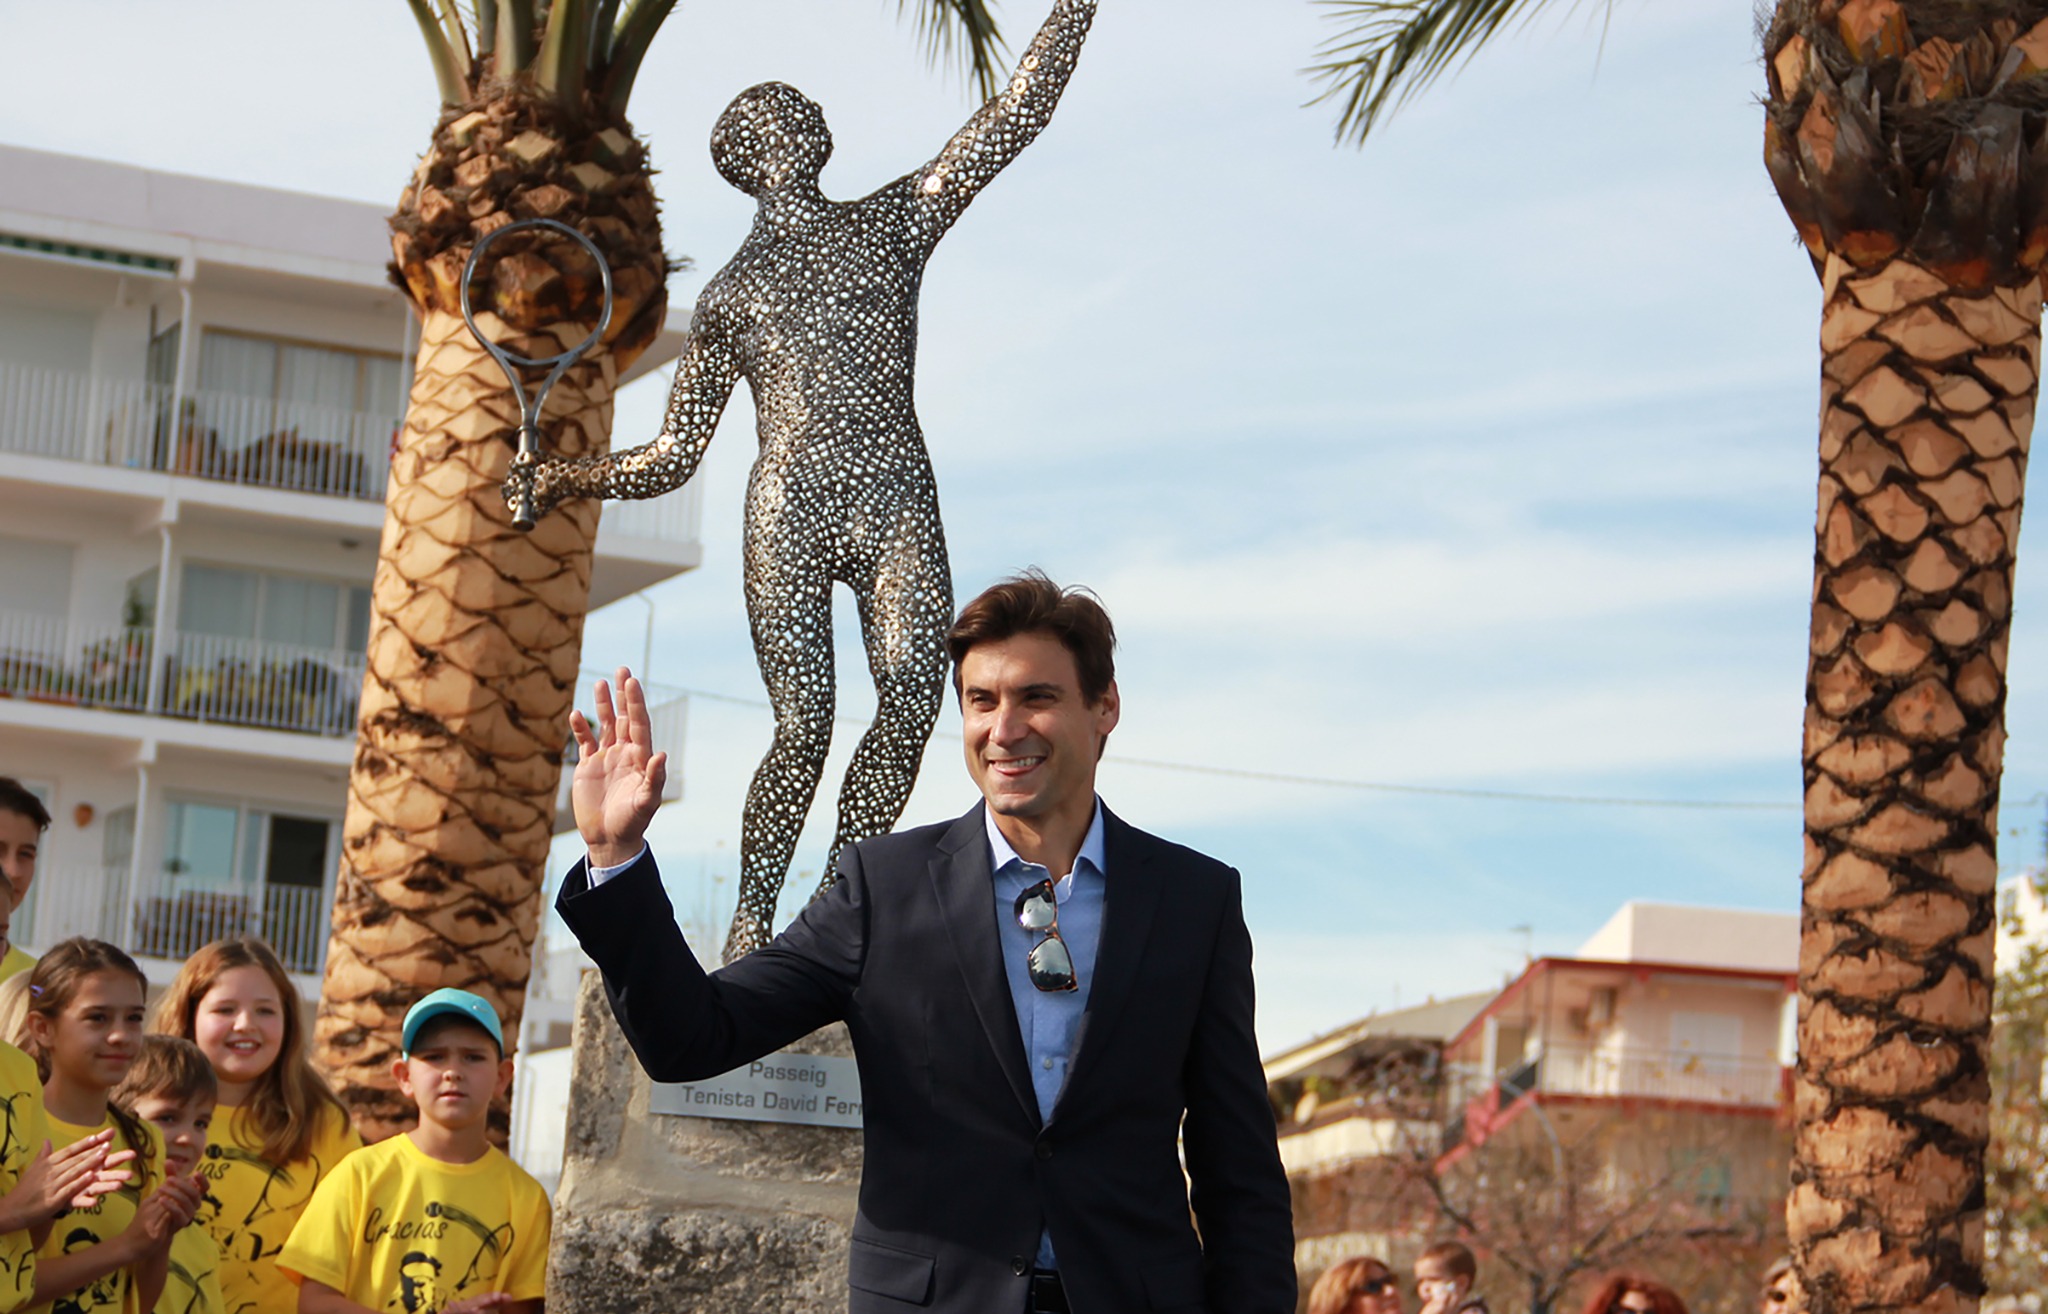 Vandals Damage Metal Statue Of Ex Tennis Star David Ferrer In His Home City On Spain's Costa Blanca